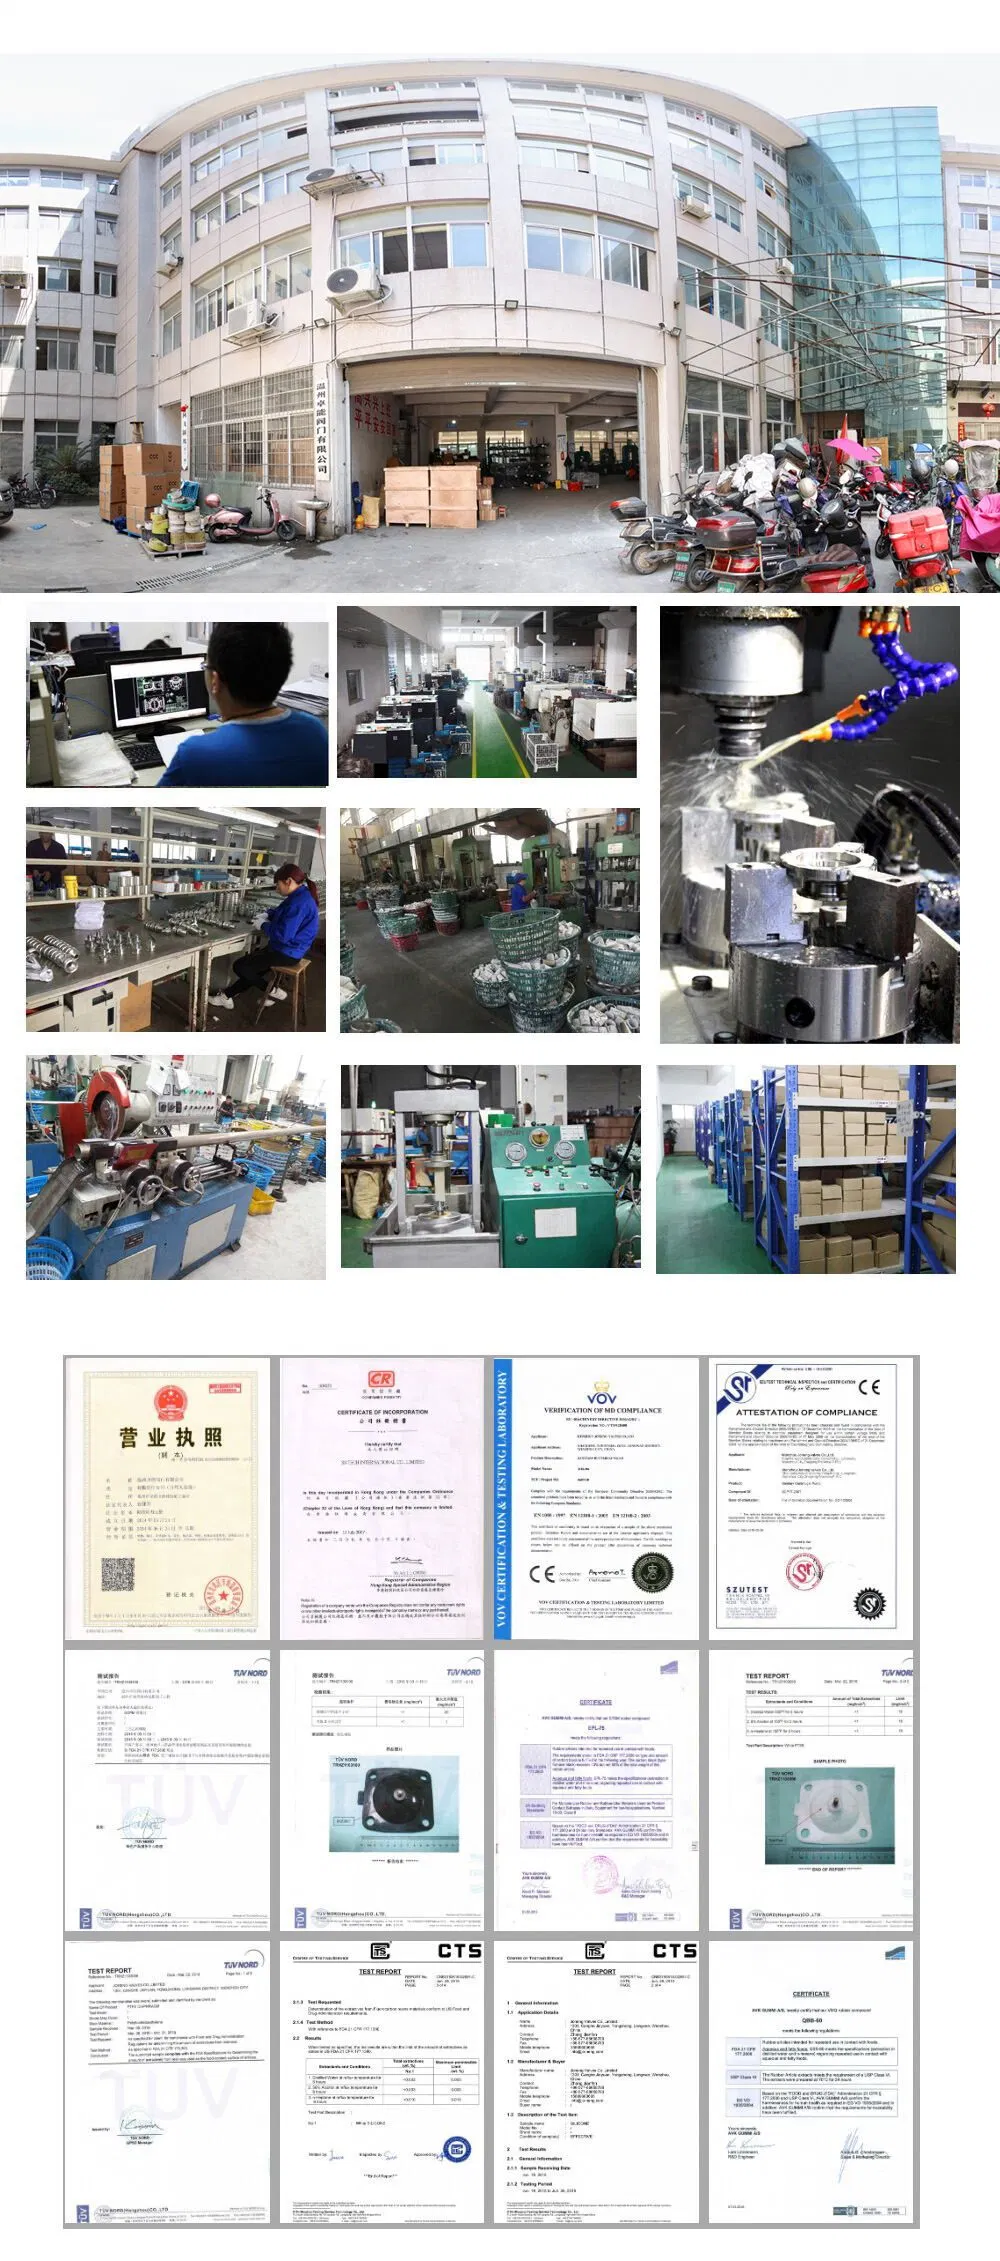 Joneng Brand Food Processing Stainless Steel Manhole Cover (JN-ML1003)